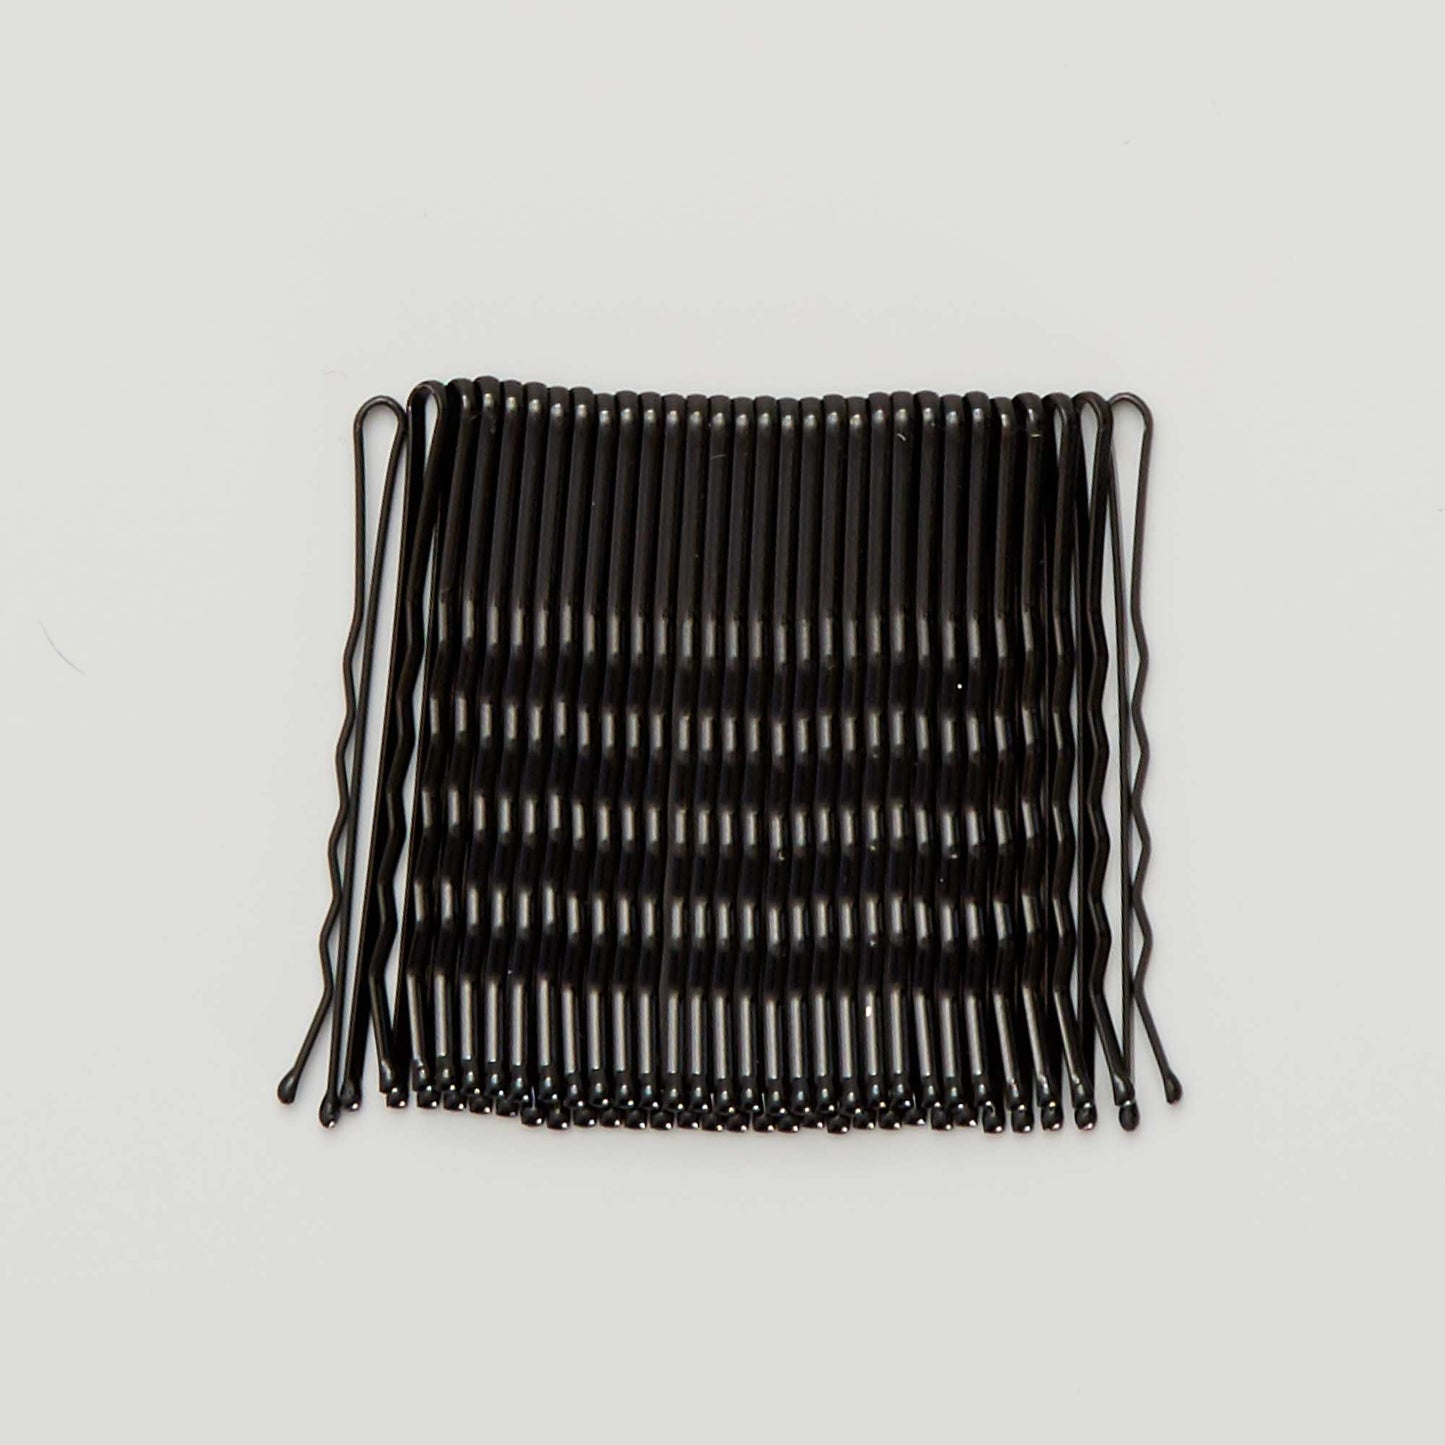 Pack of 30 hairpins black